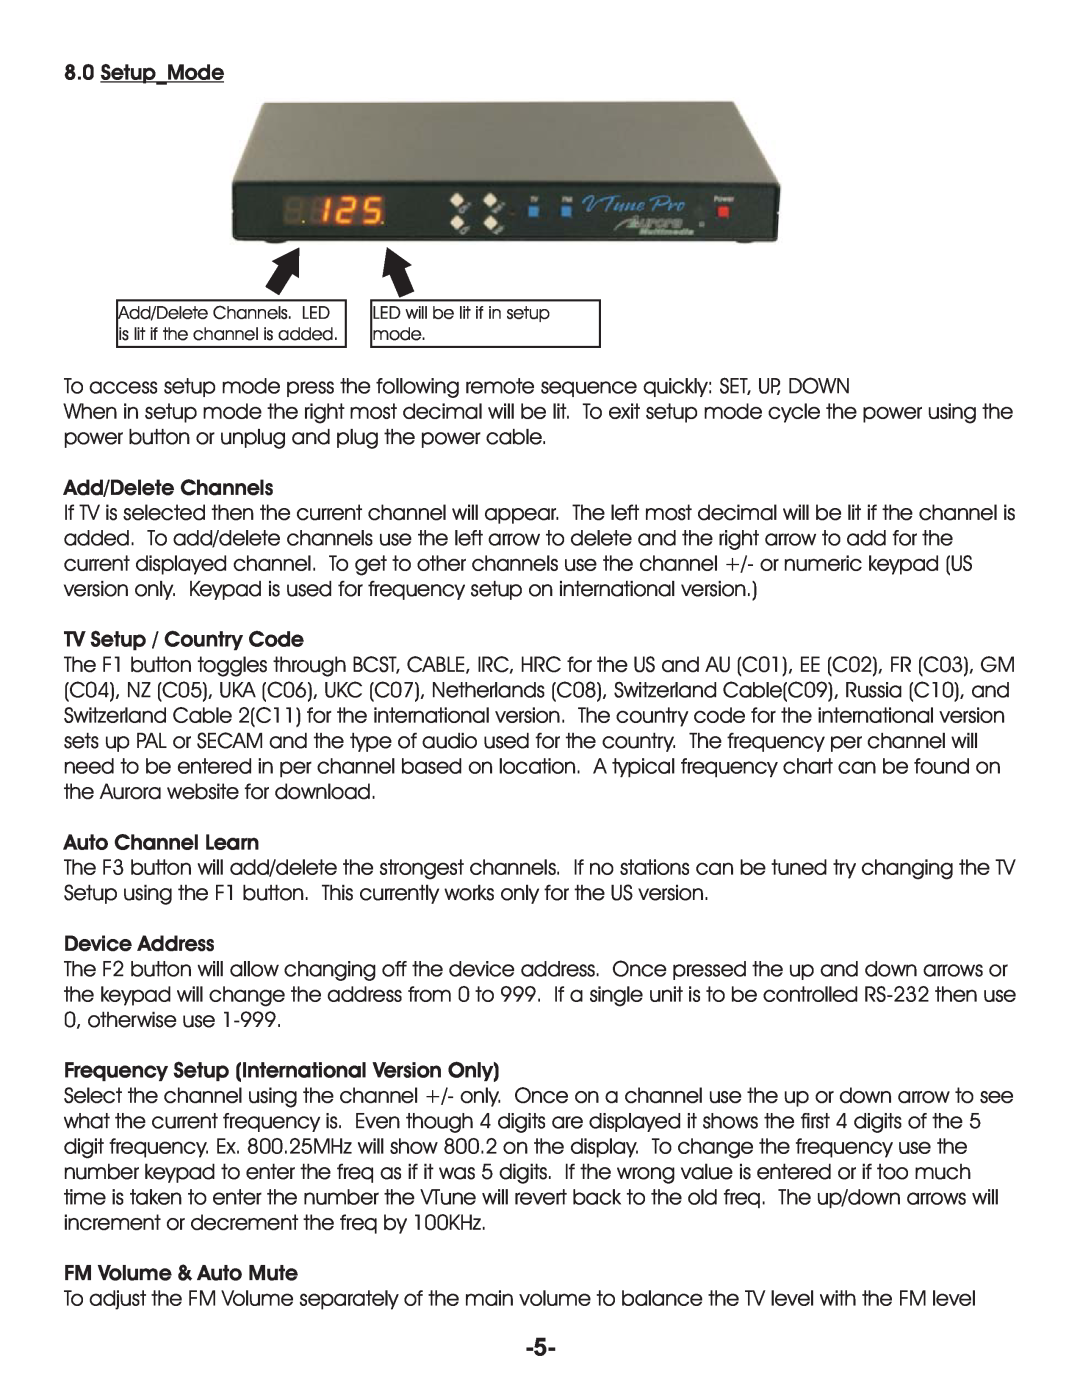 Aurora Multimedia TV/FM Tuner manual 8.0Setup Mode, Add/Delete Channels, TV Setup / Country Code, Auto Channel Learn 